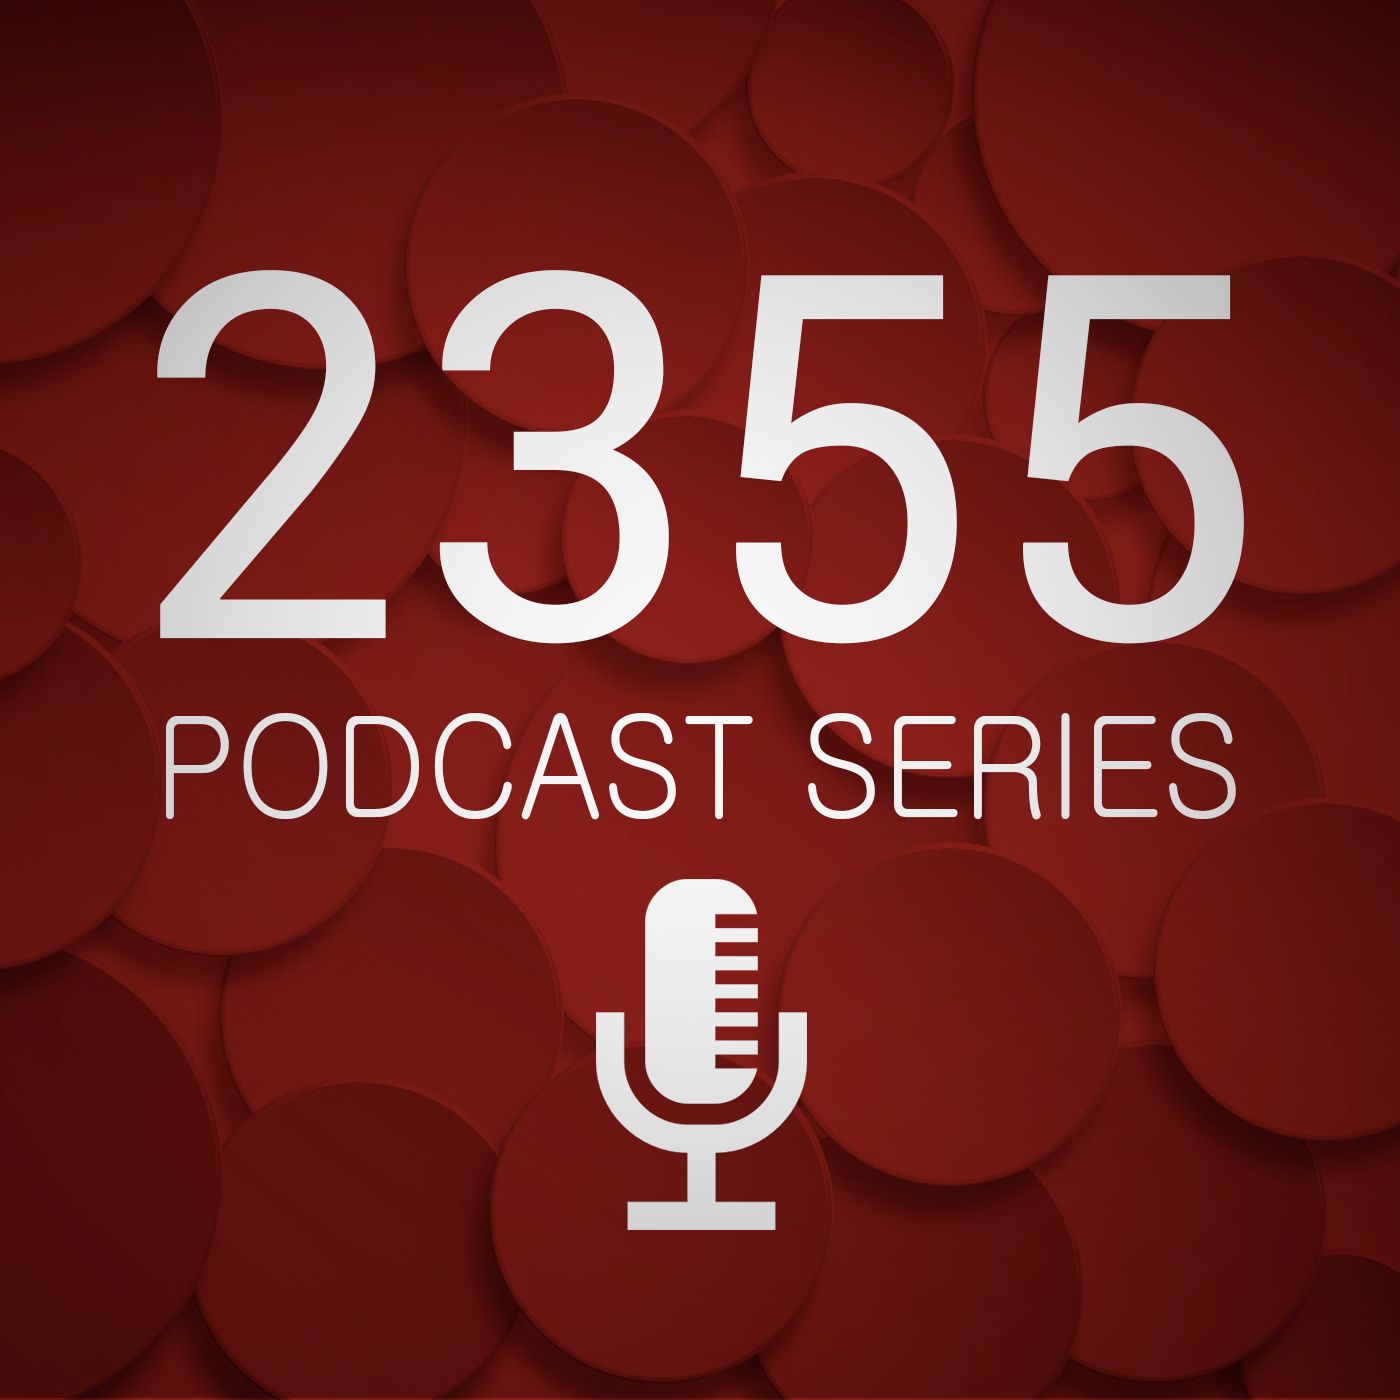 2355 Podcast Series